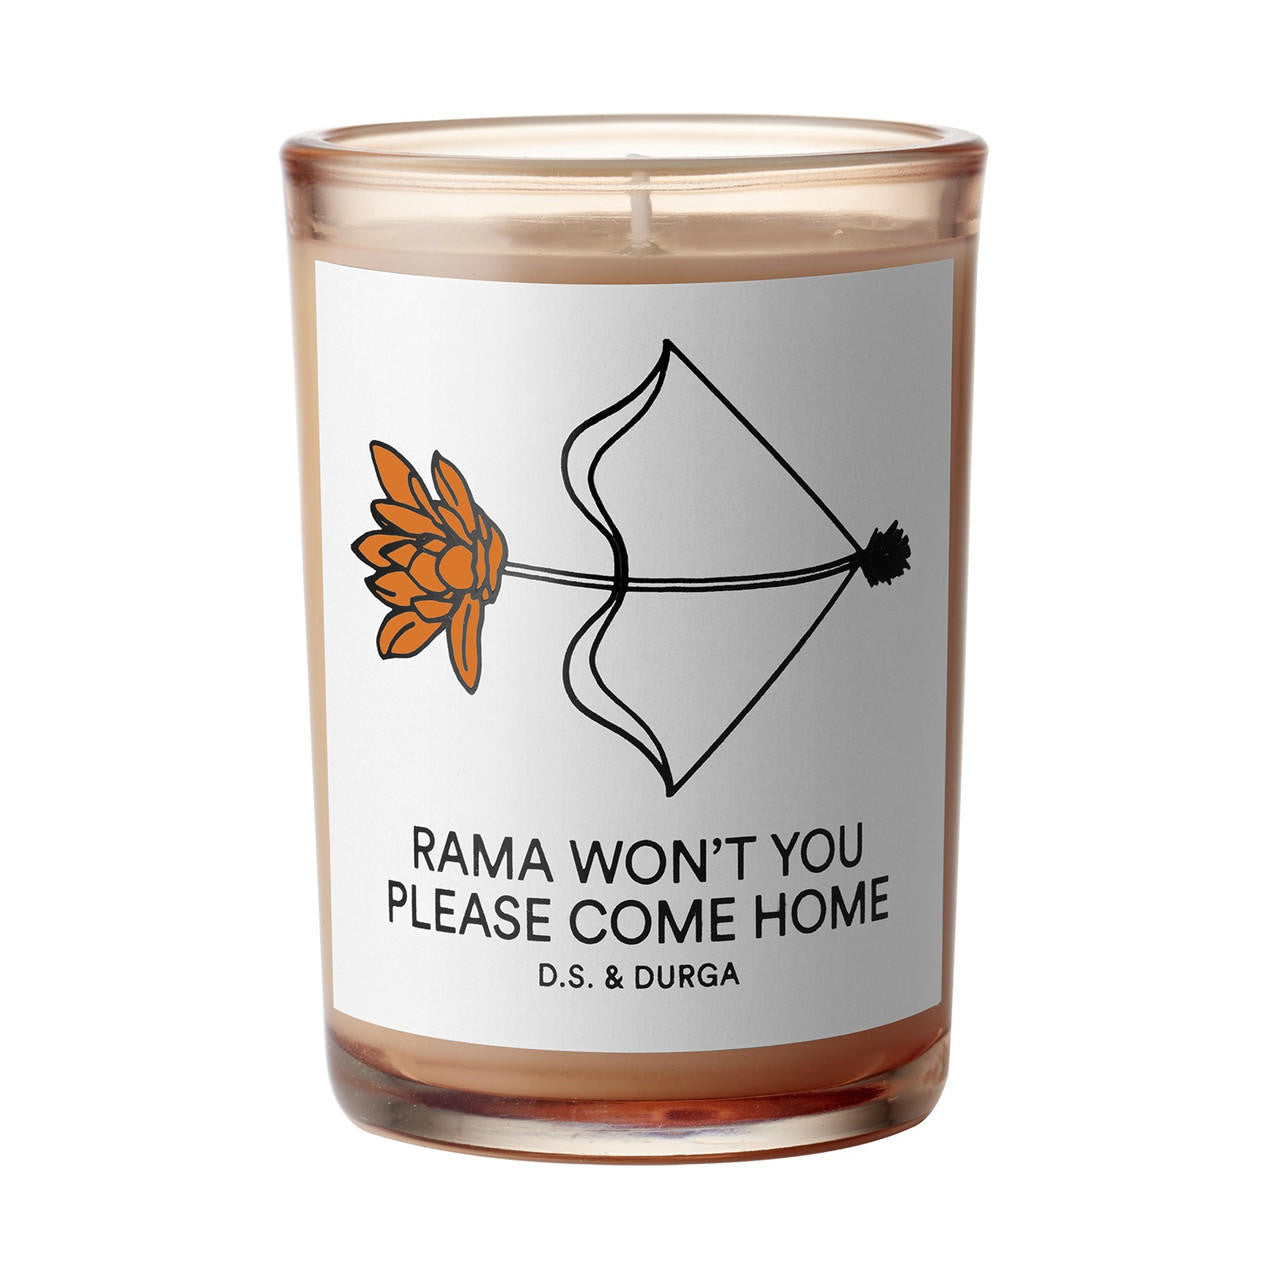 D.S. & DURGA Rama Won't You Please Come Home Candle | ZGO Perfumery